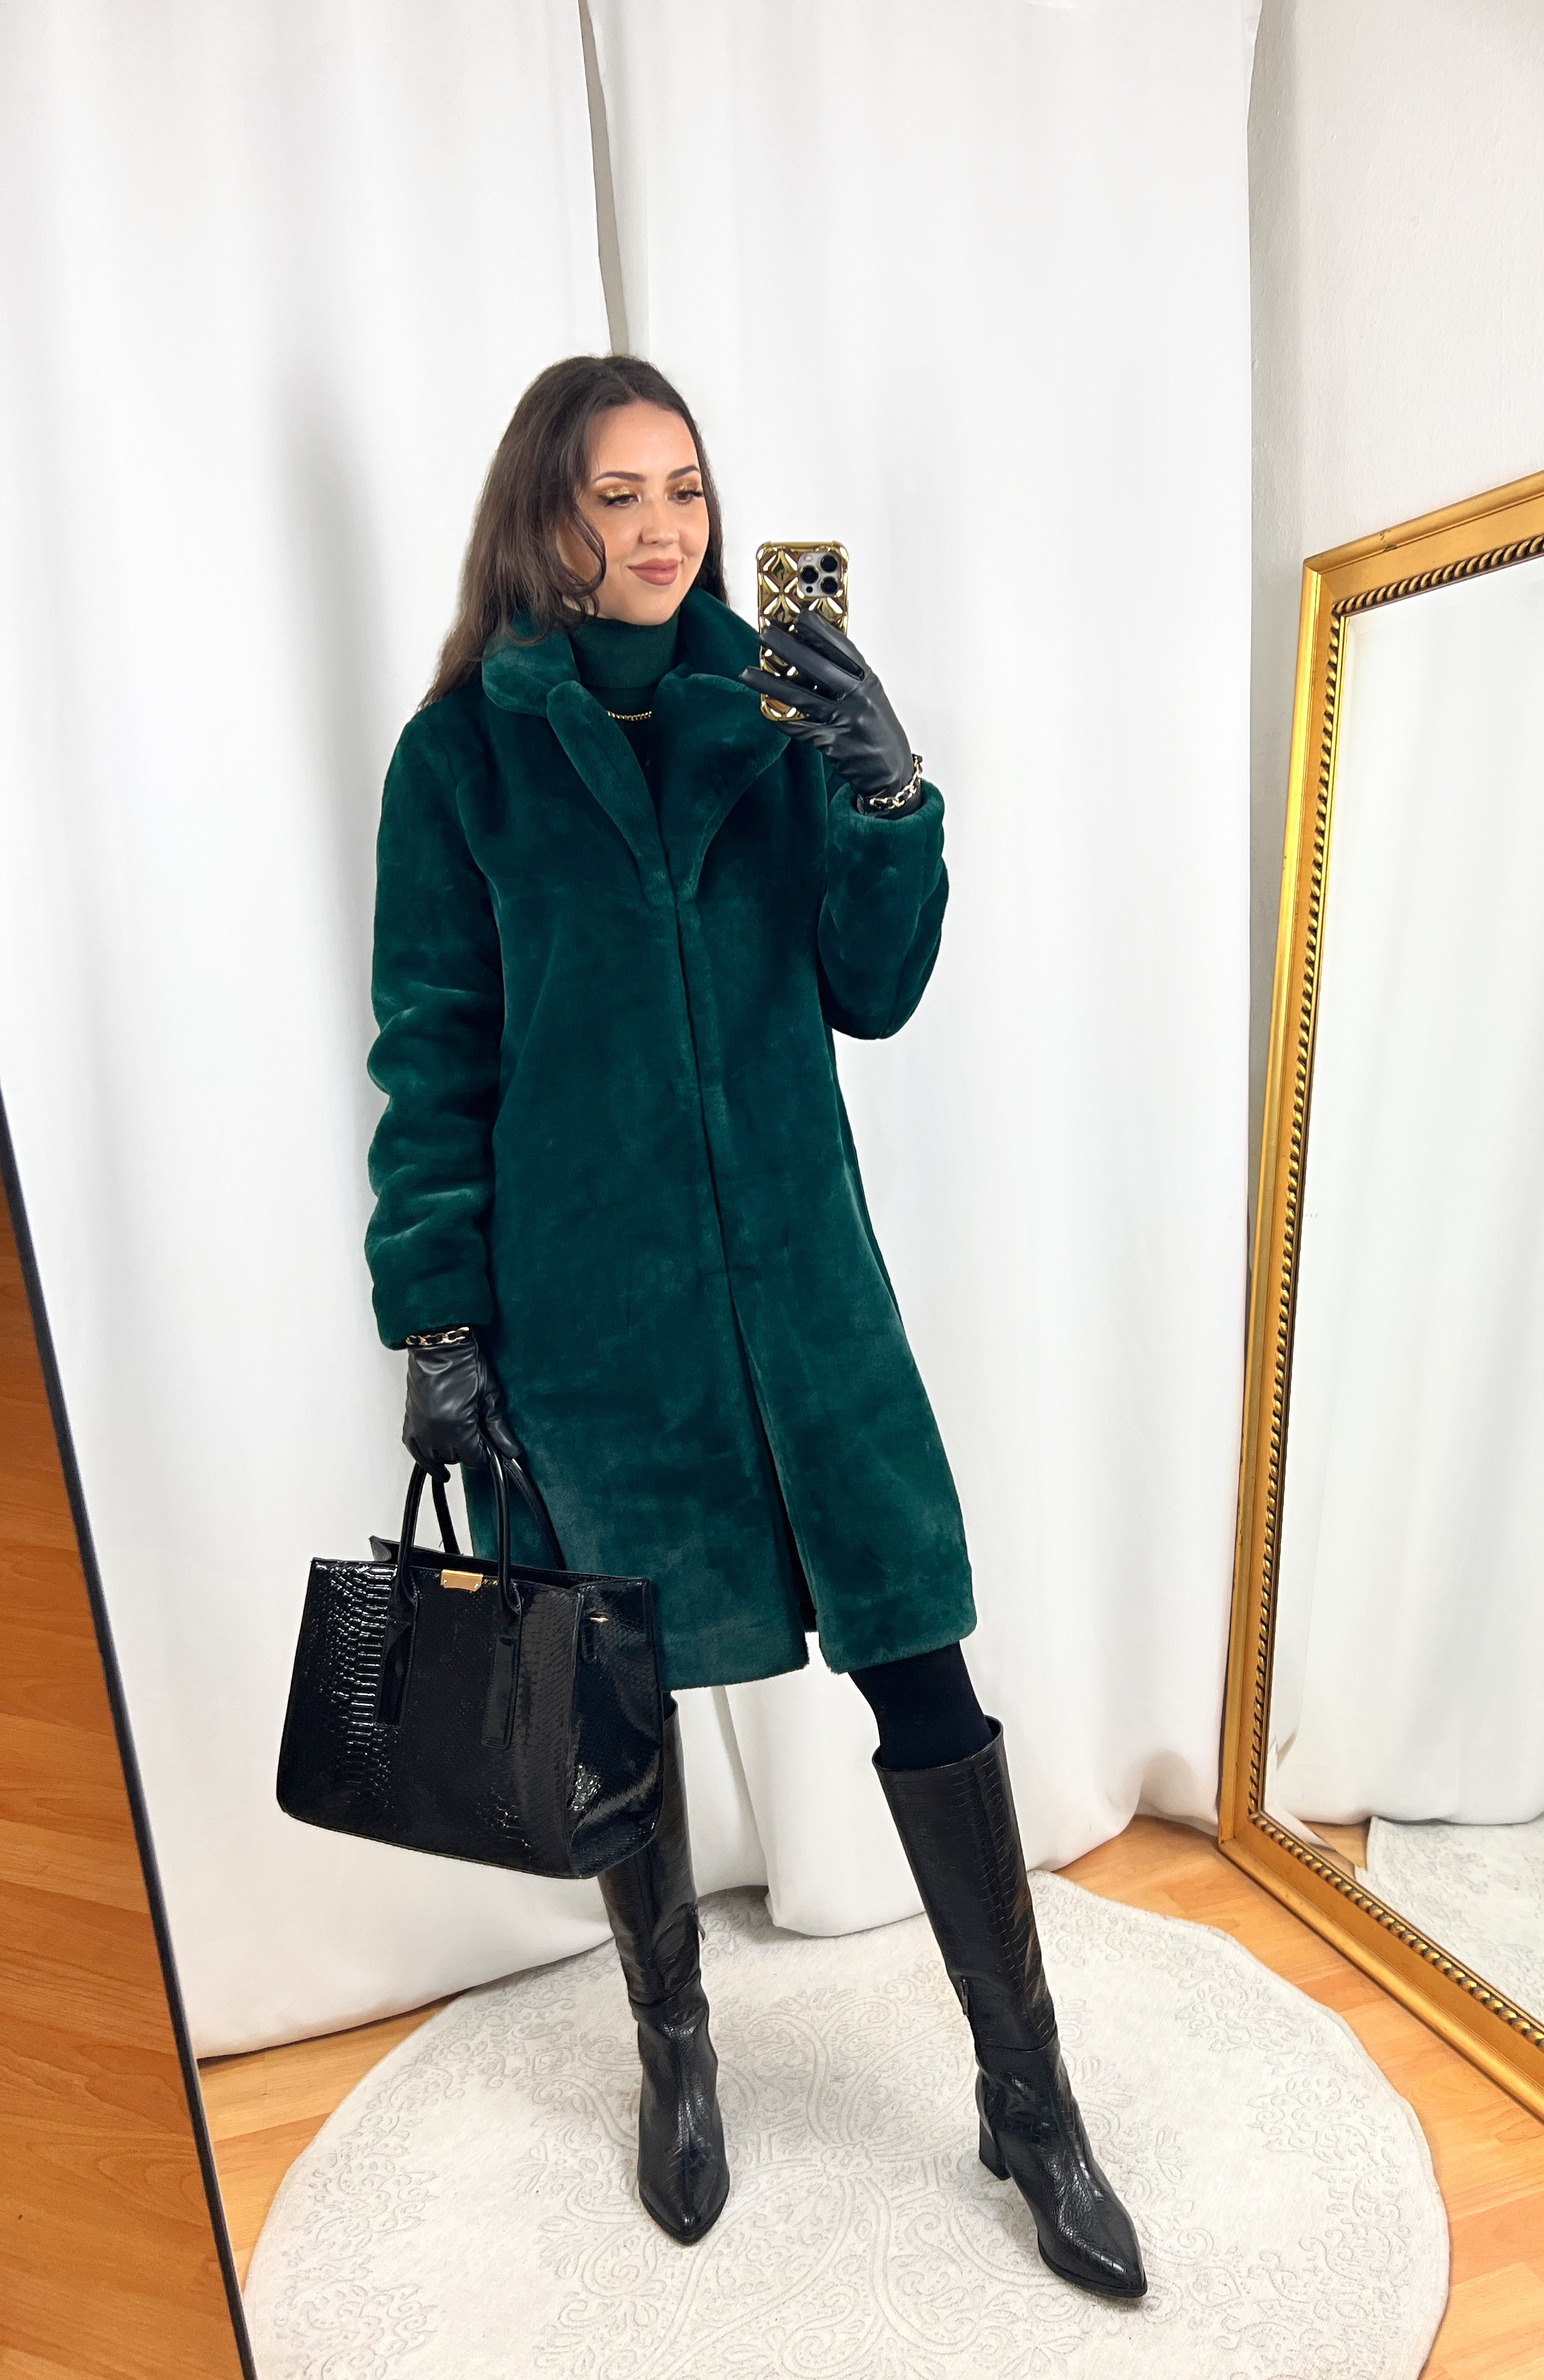 Green Fur Coat Outfit